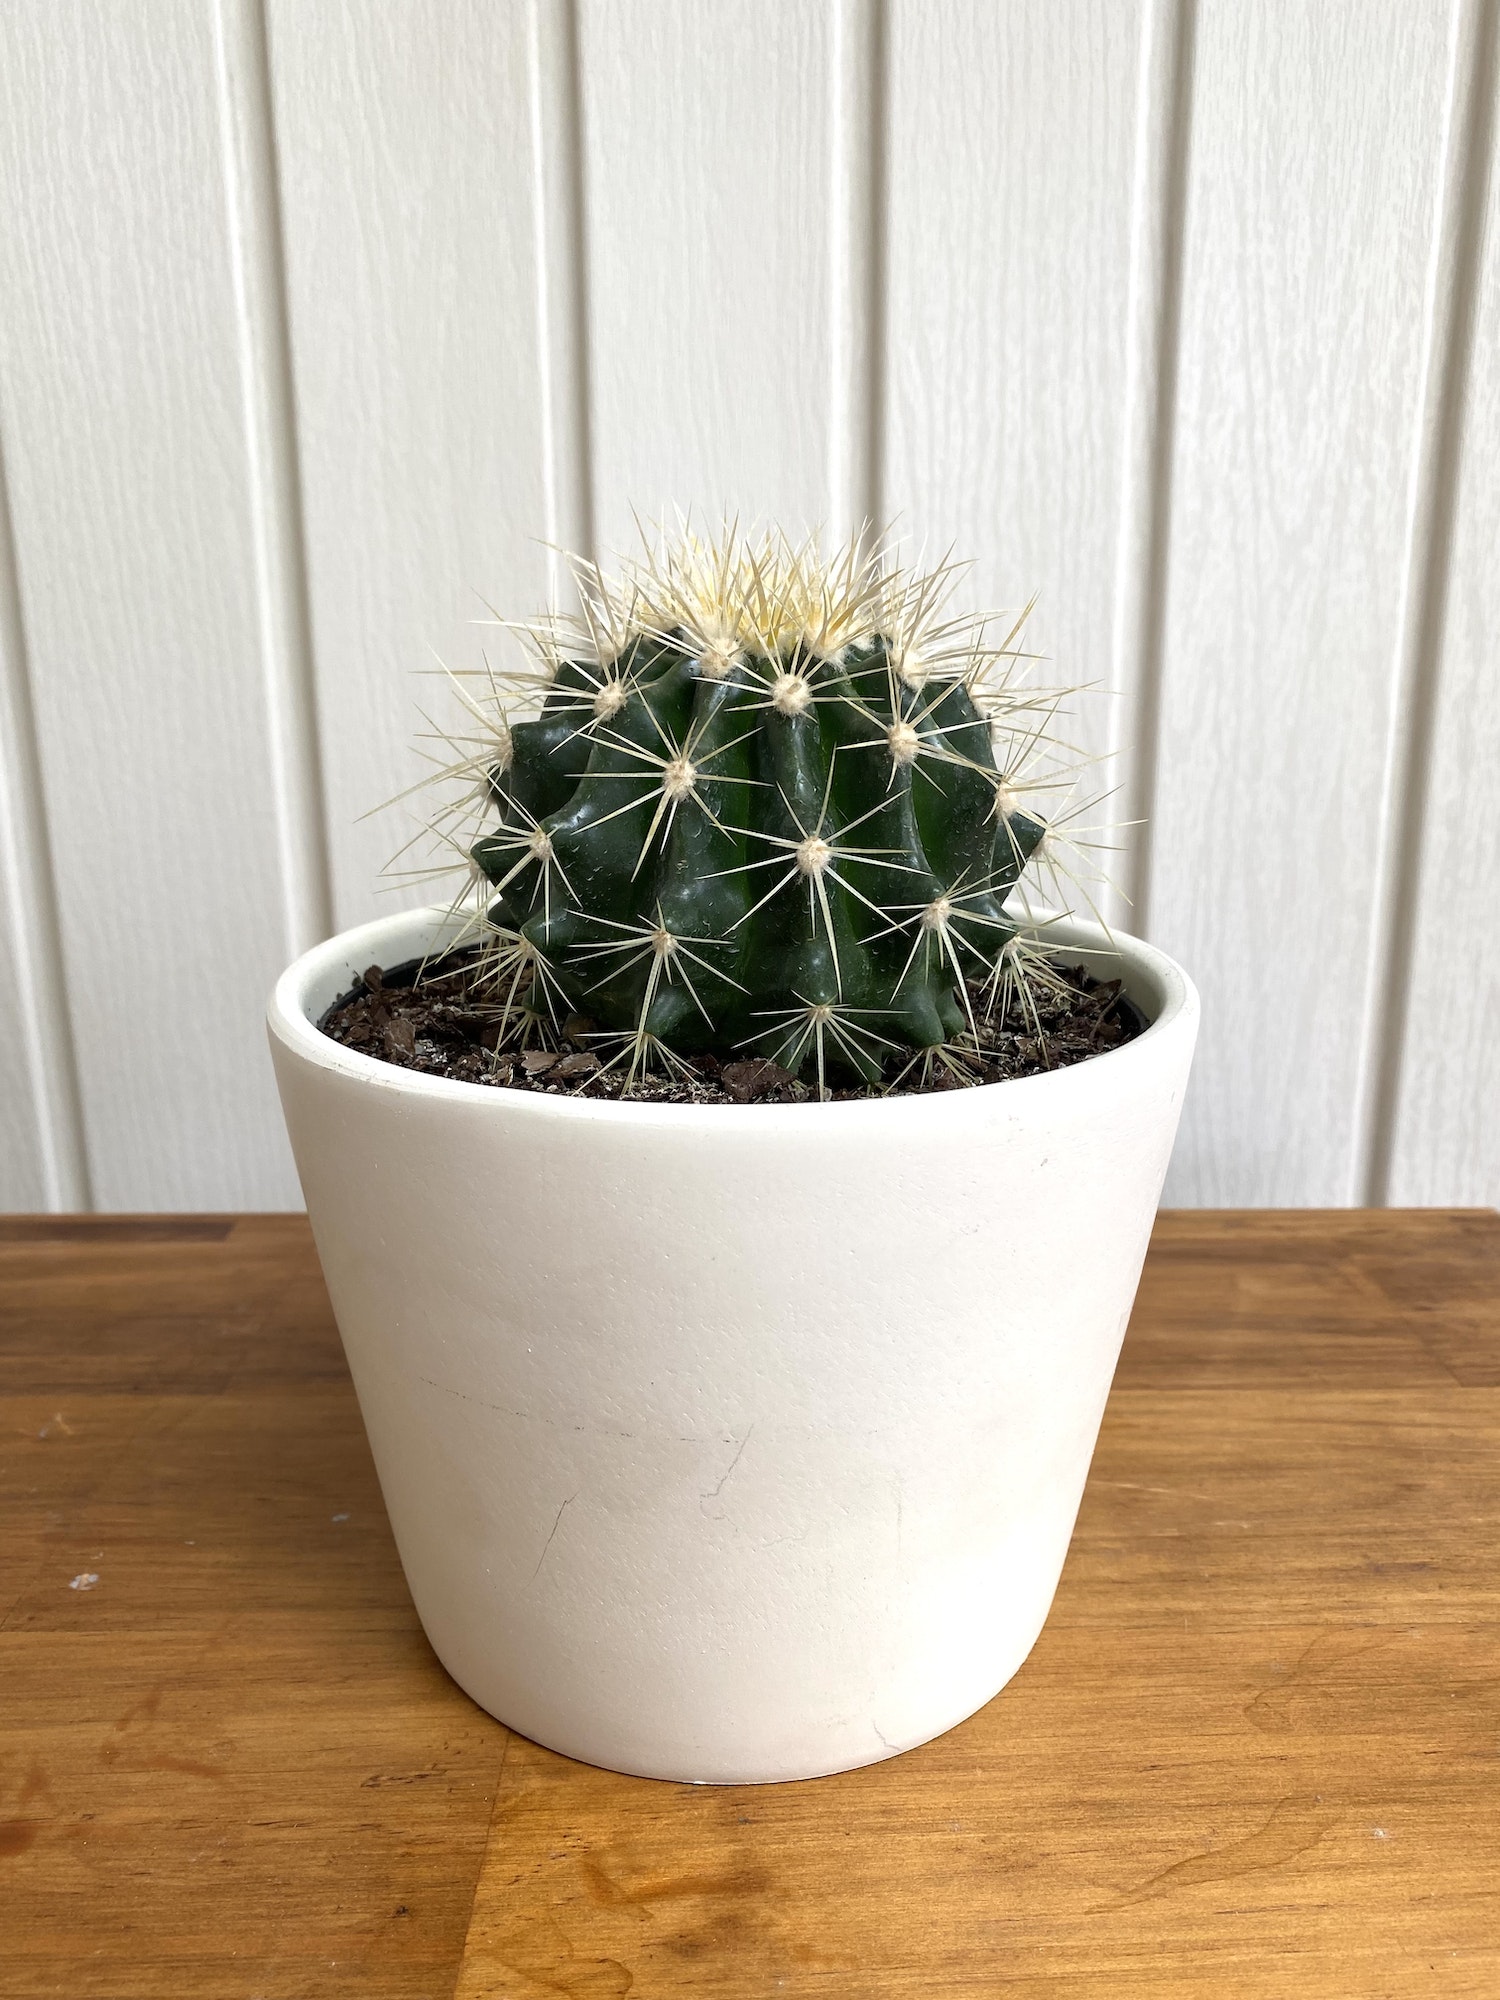 Isolated cactus plant